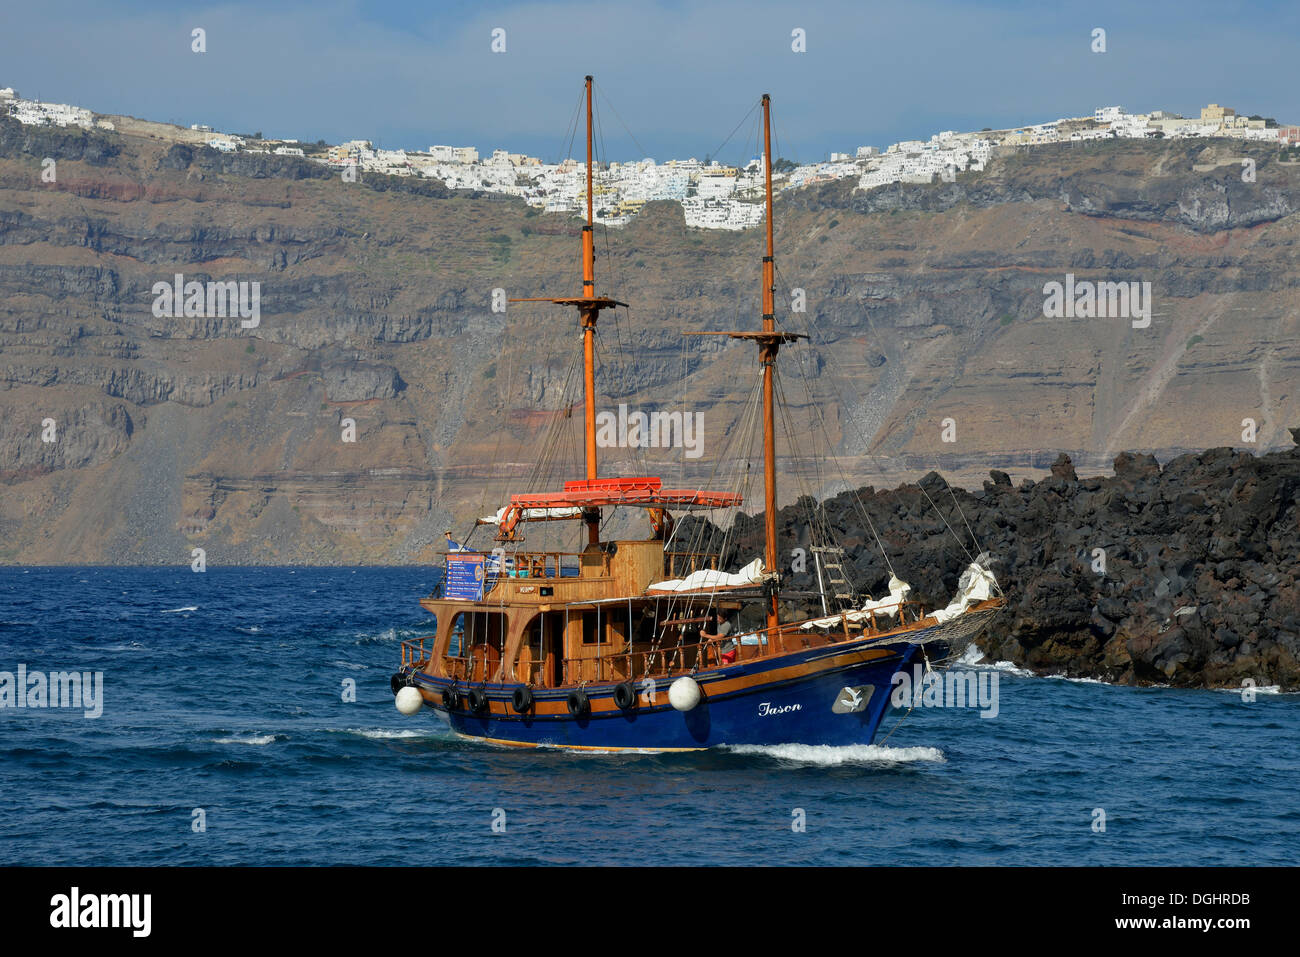 Sailing ship 'Jason' sailing in the Caldera, Santorini, Cyclades, Greek Islands, Greece, Europe Stock Photo